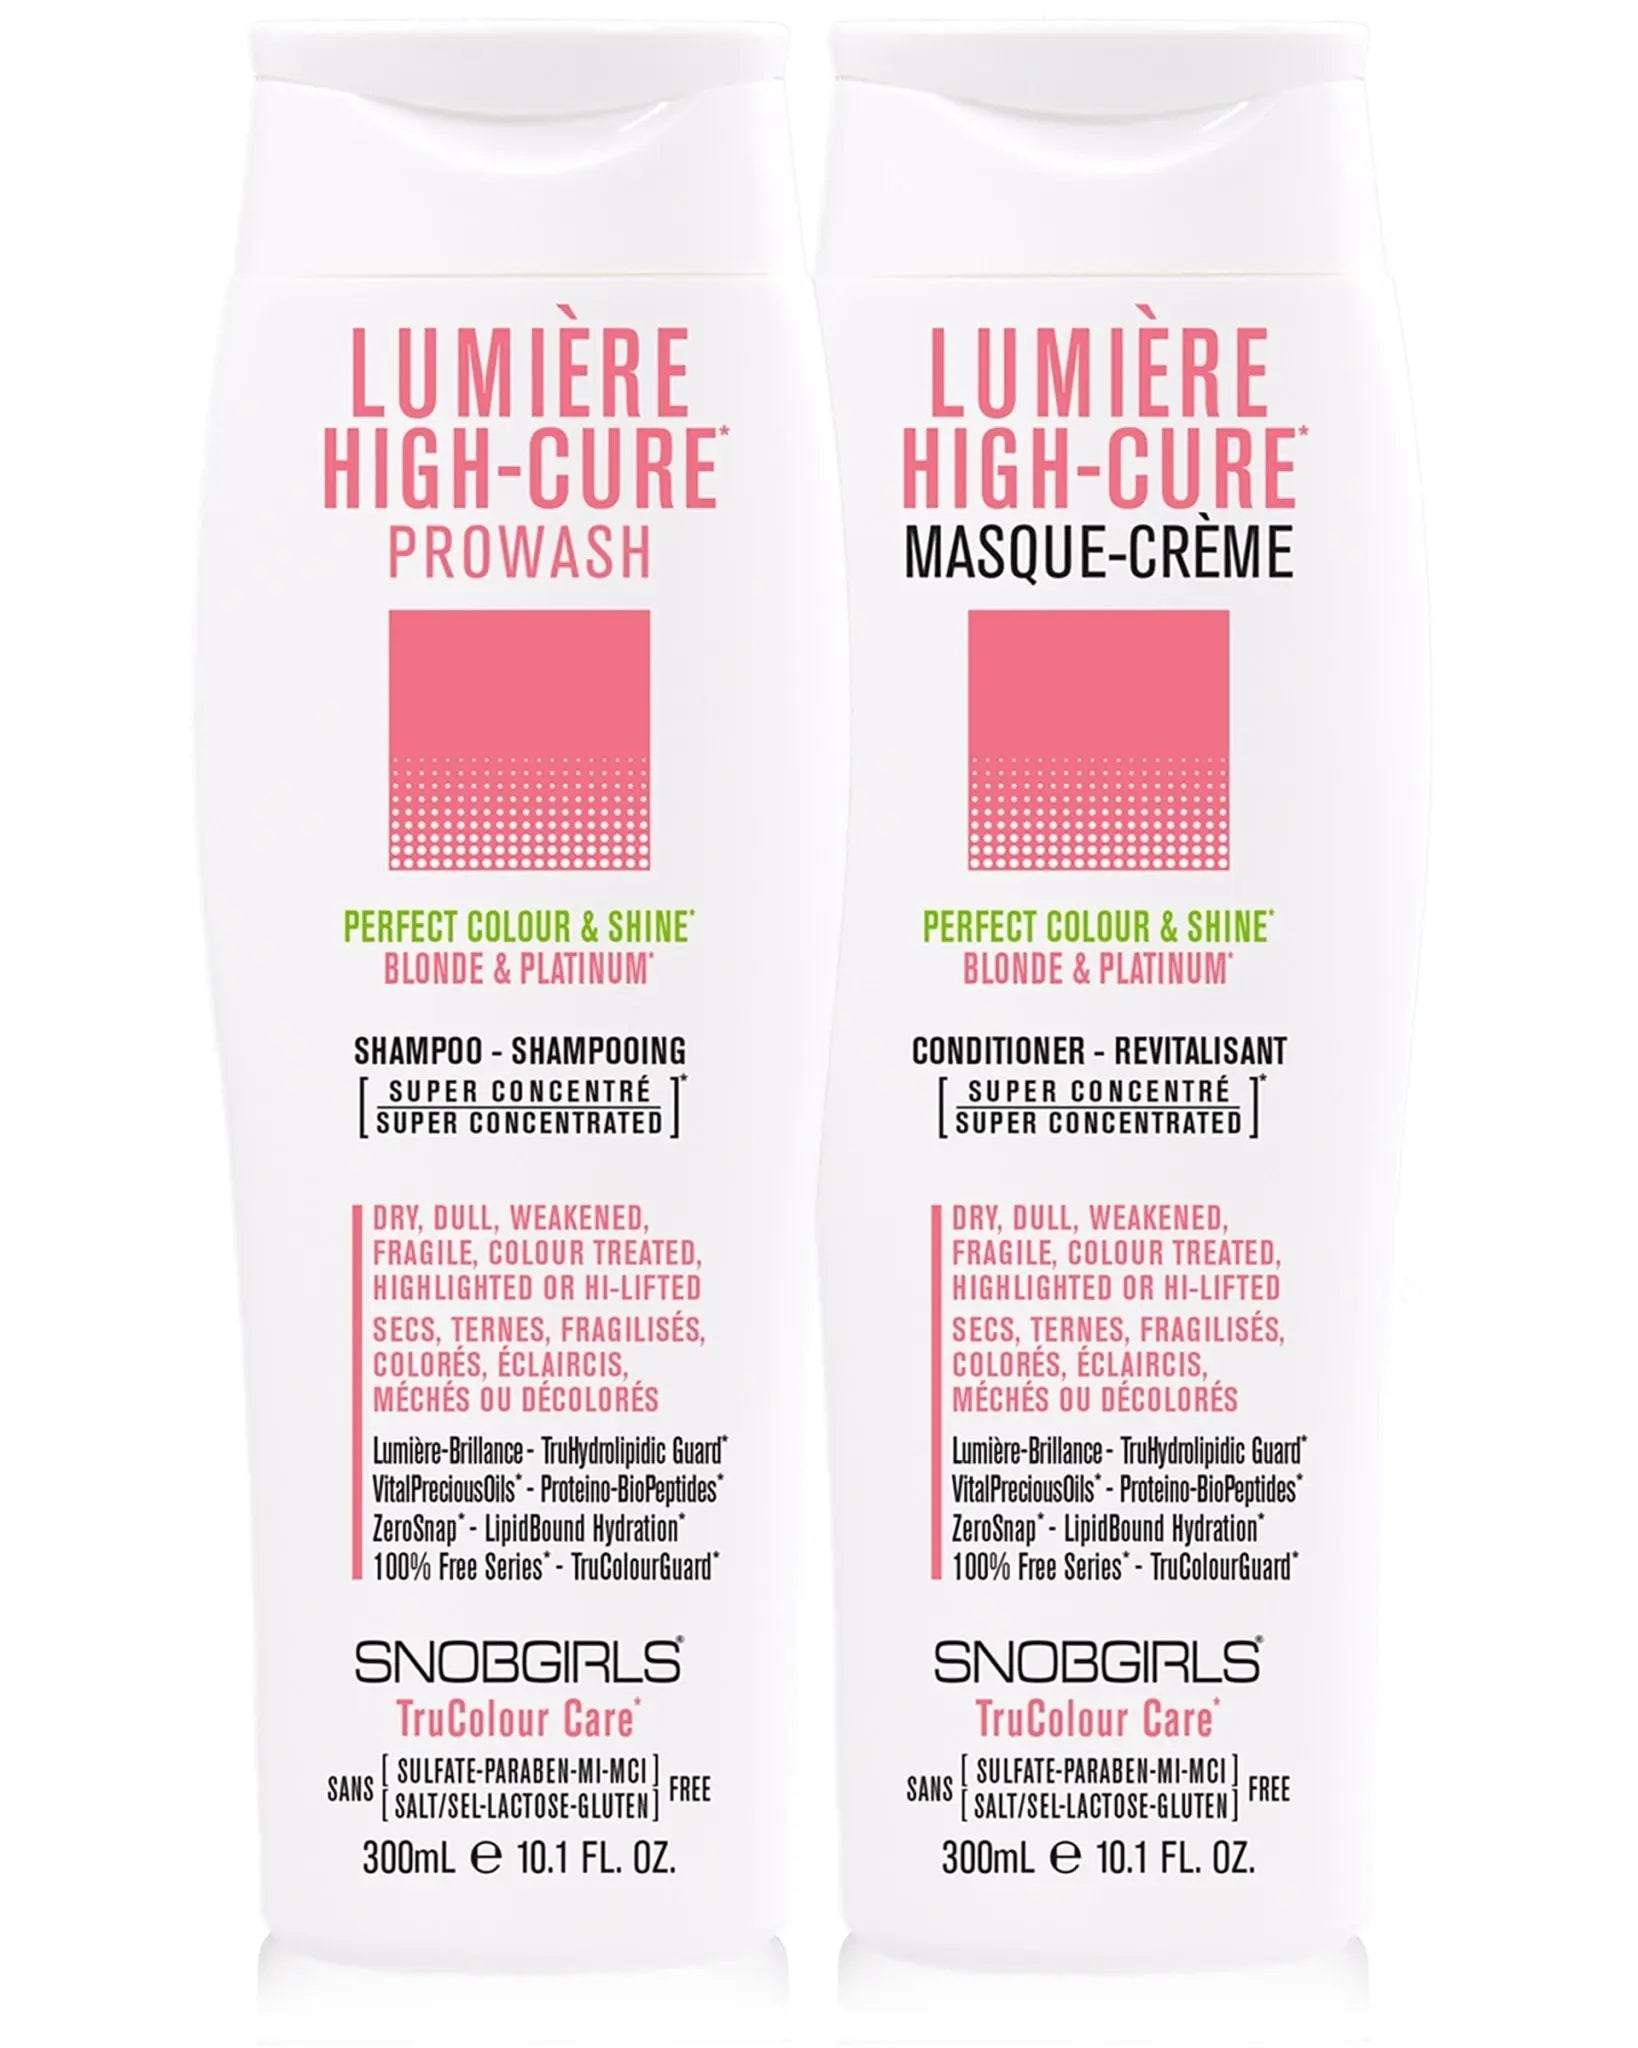 DUO LUMIERE HIGHCURE Prowash + Masque-Creme - SNOBGIRLS Canada